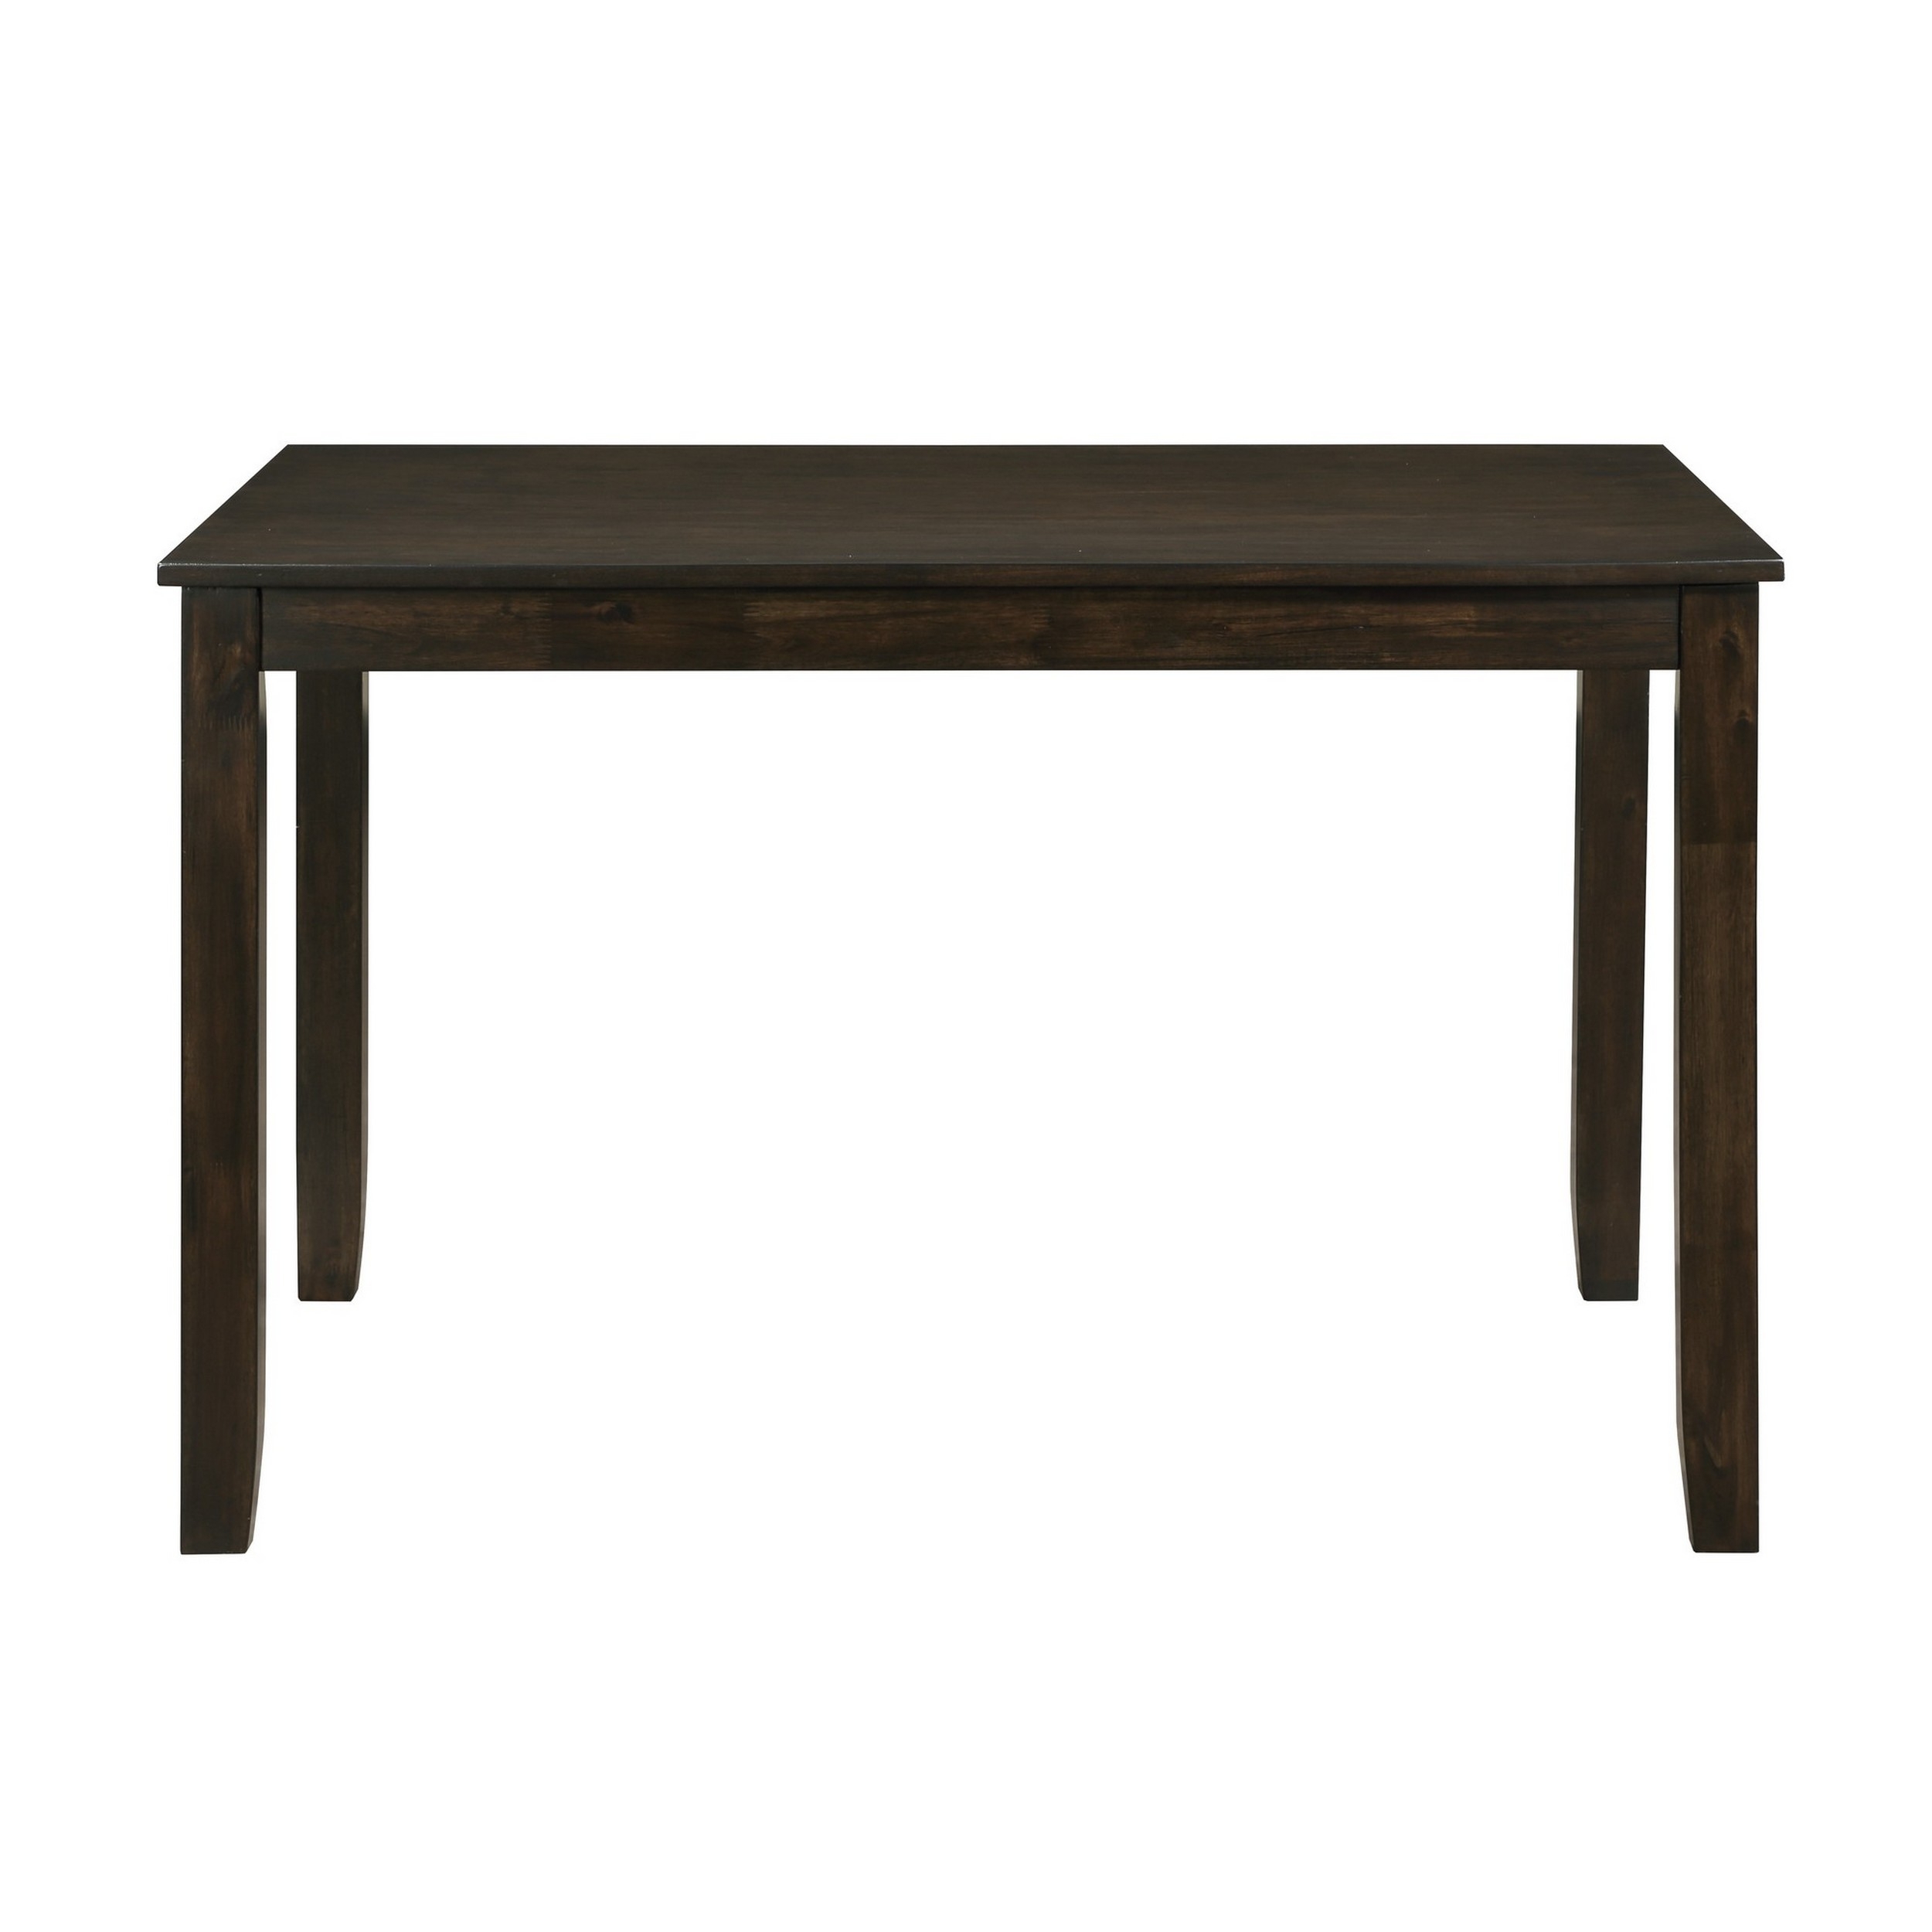 Ava 5pc Dining Table Set, 4 Lattice Back Chairs, Brown Rubberwood Frame -Saltoro Sherpi